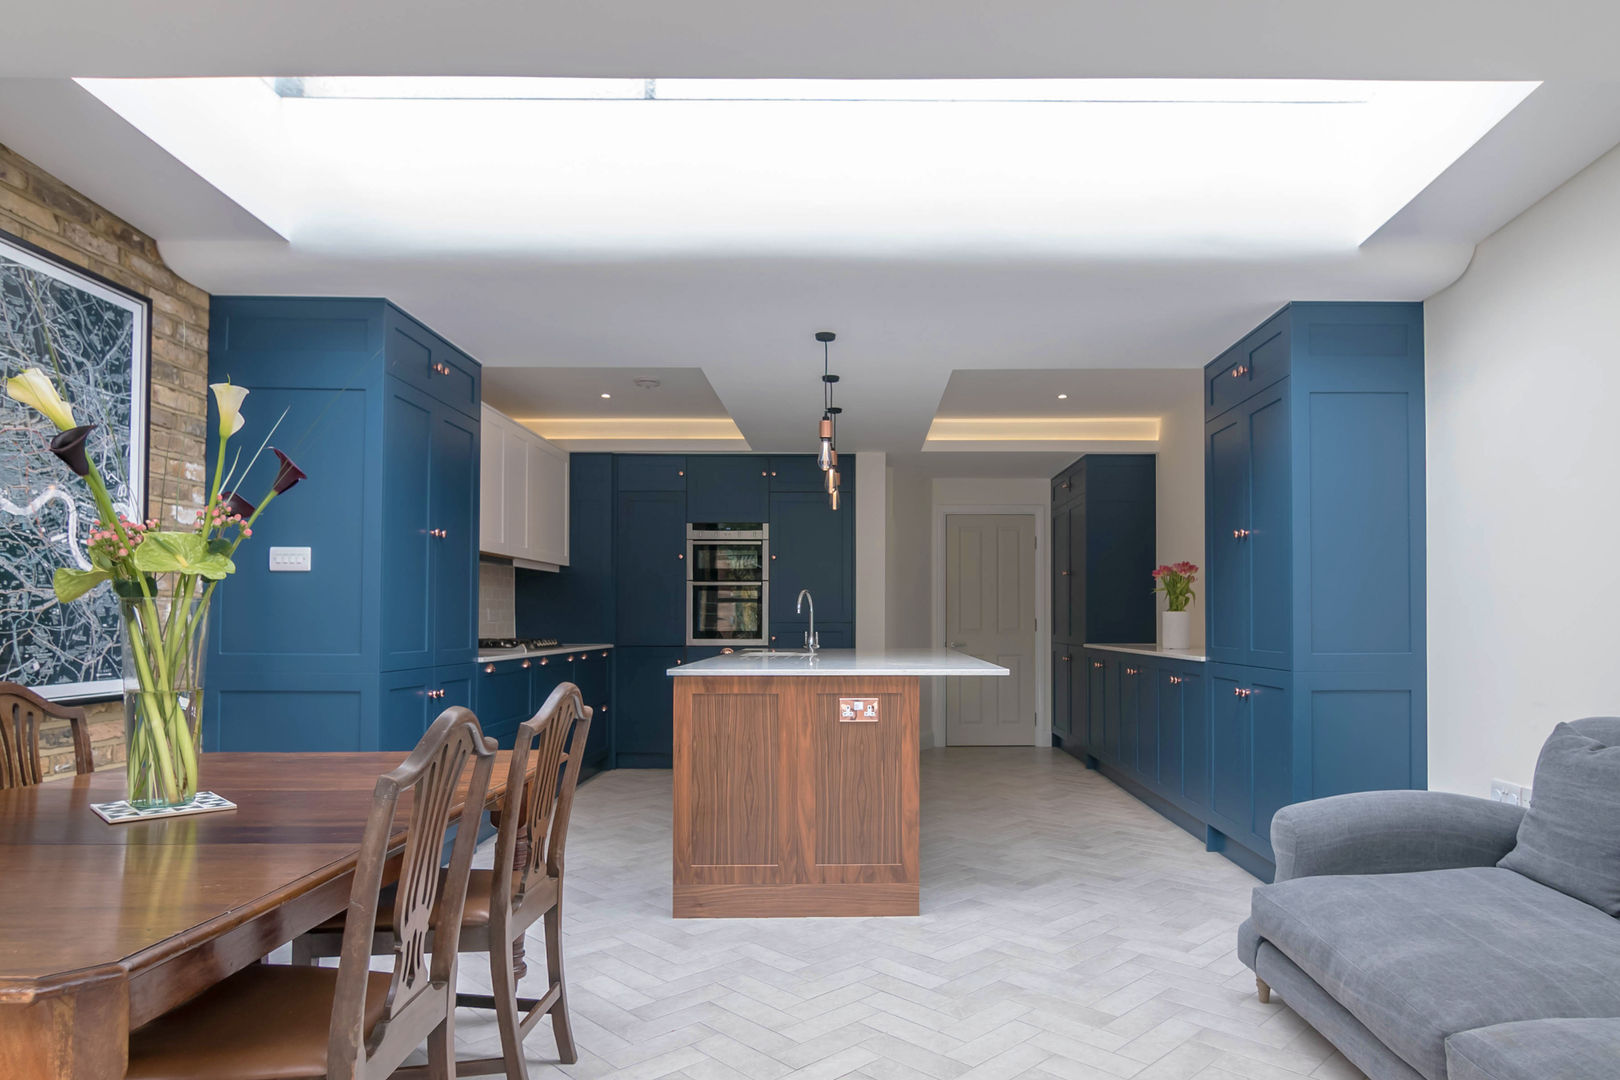 East Dulwich 1 Proctor & Co. Architecture Ltd Nowoczesna kuchnia Płytki blue kitchen,walnut,herringbone tile,copper pendant,london kitchen,modern kitchen,east dulwich,london,curved ceiling